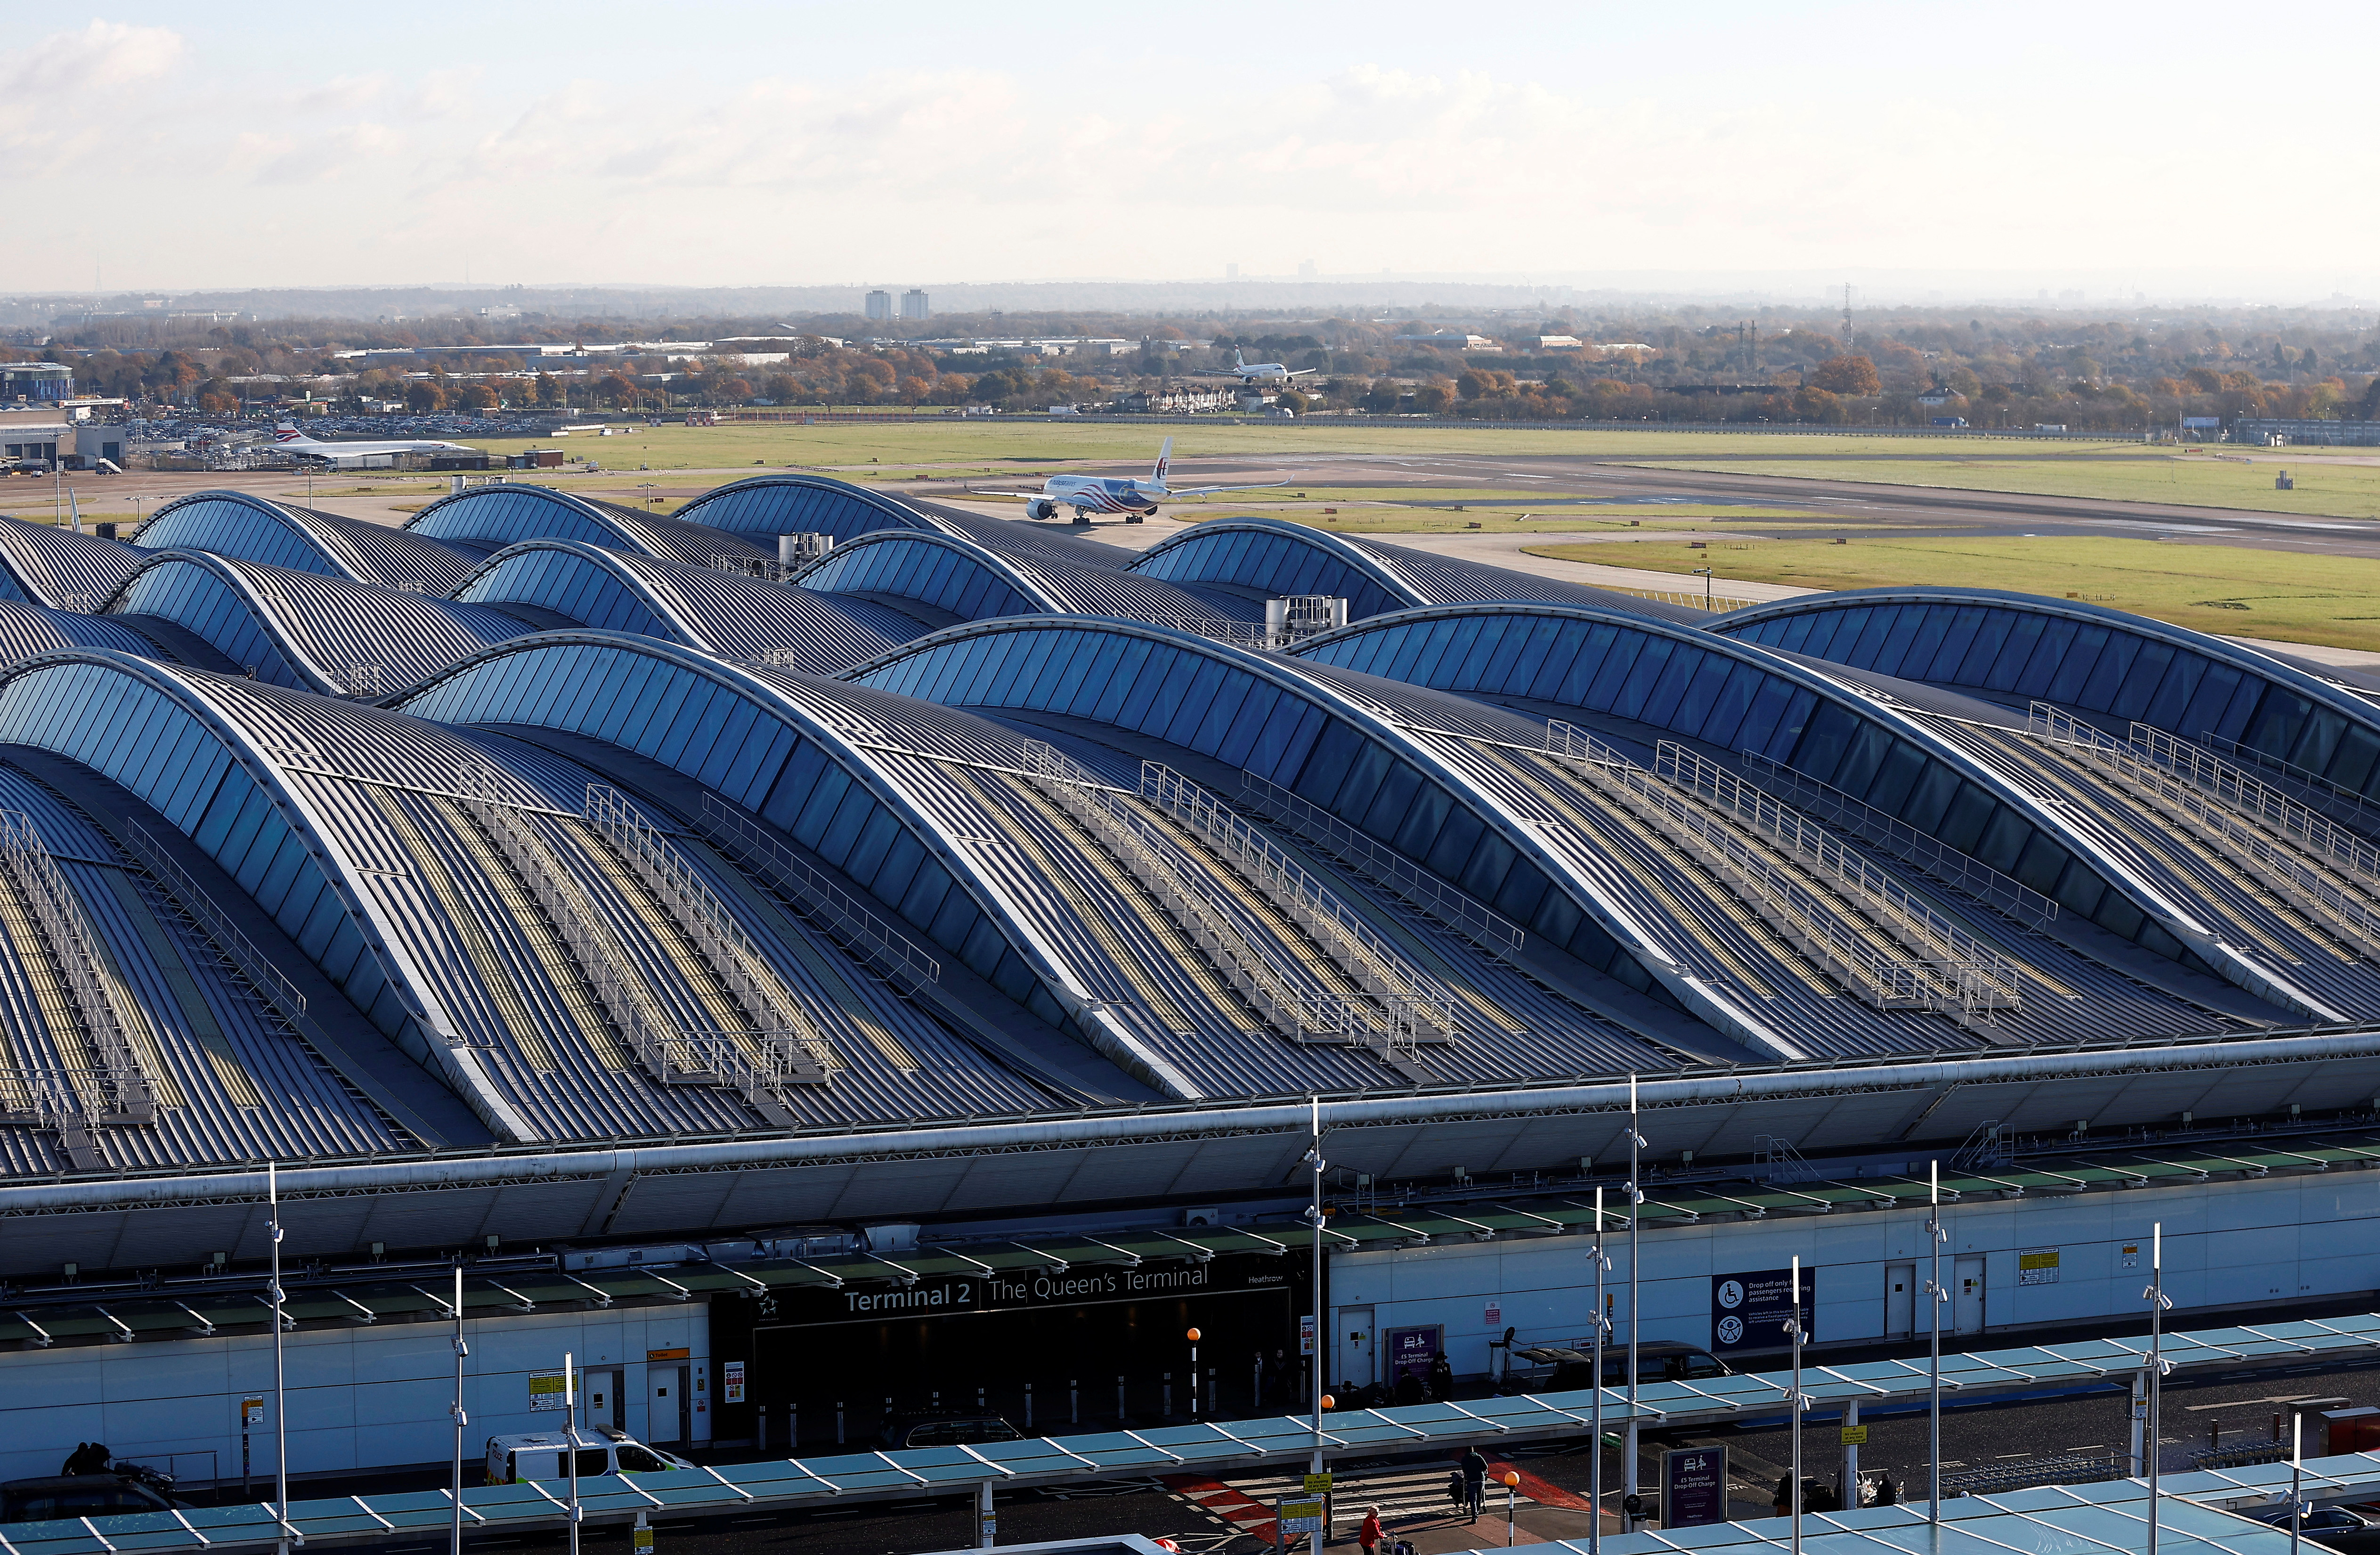 Terminal 2 The Queen's Terminal at Heathrow Airport